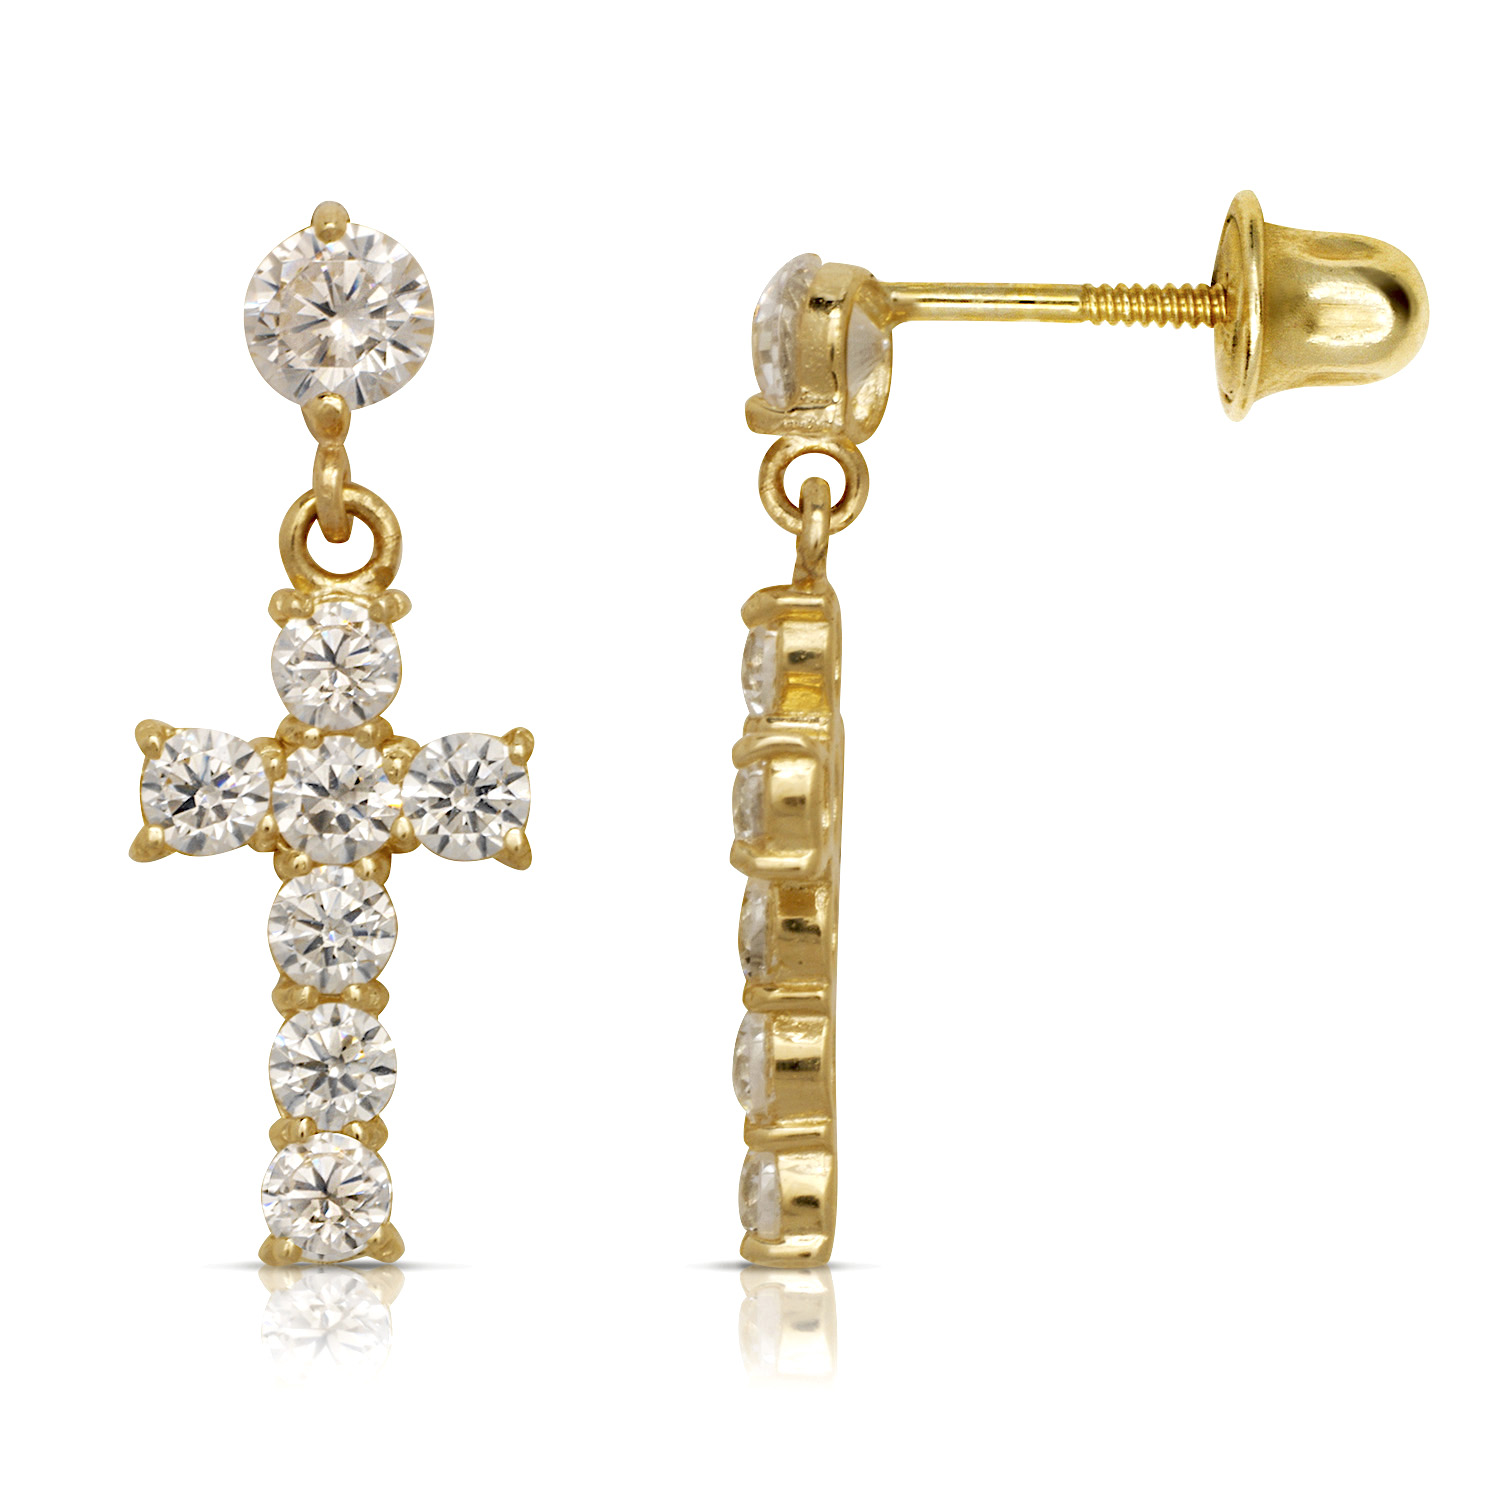 Jewelryweb 14k Yellow Gold Cubic Zirconia Big Cross Screw-Back Earrings - Measures 15x7mm